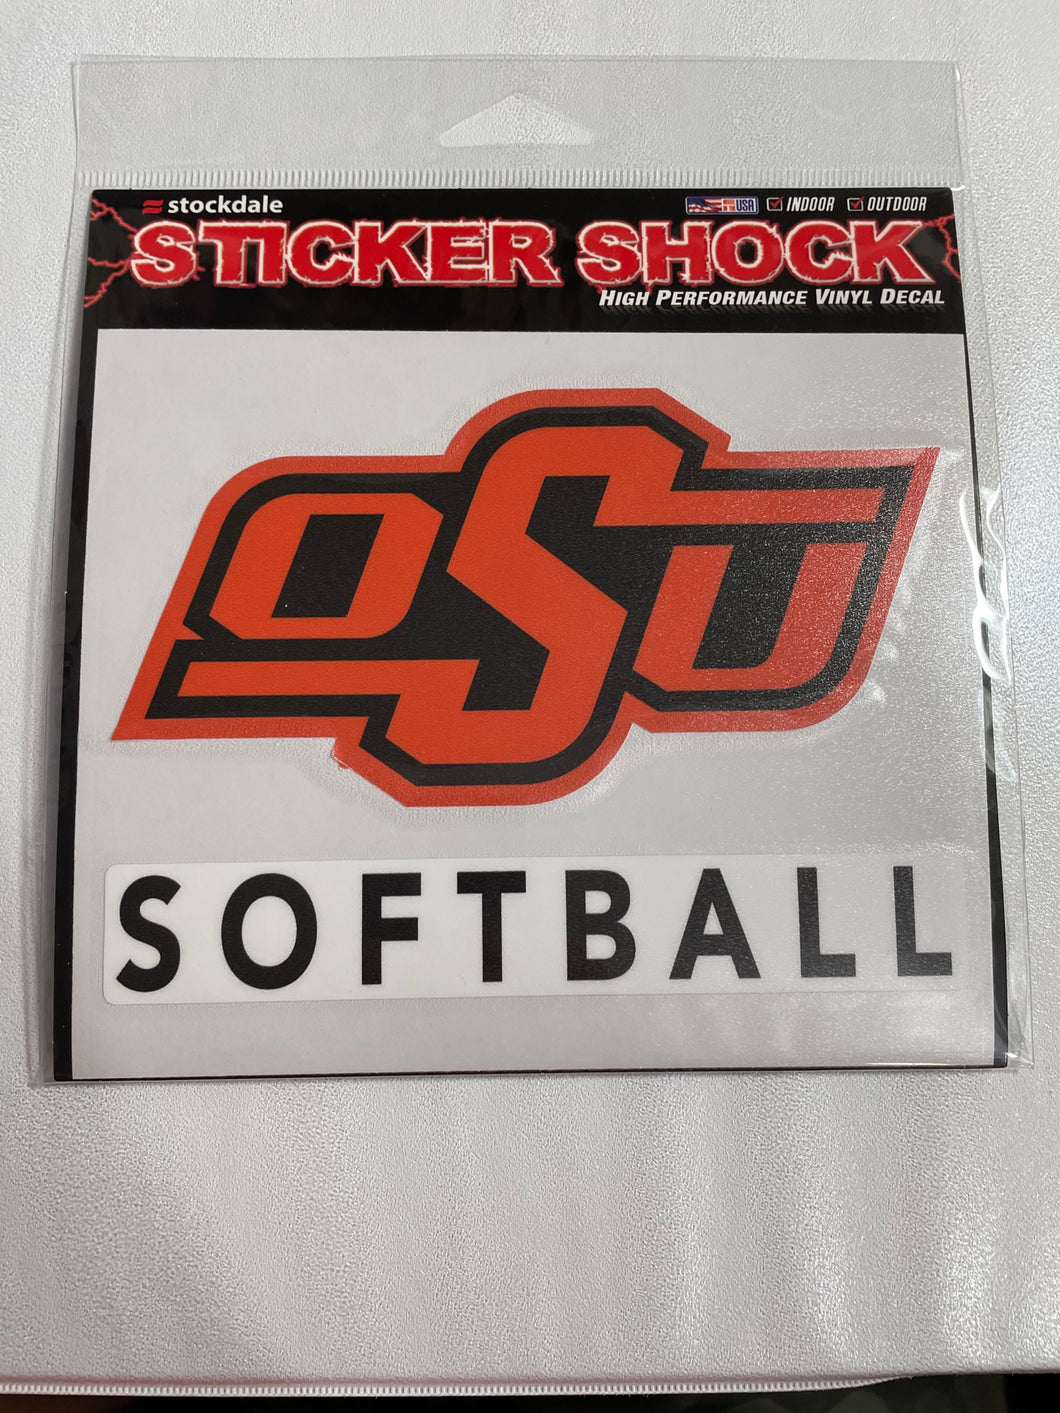 OSU Brand Softball Decal